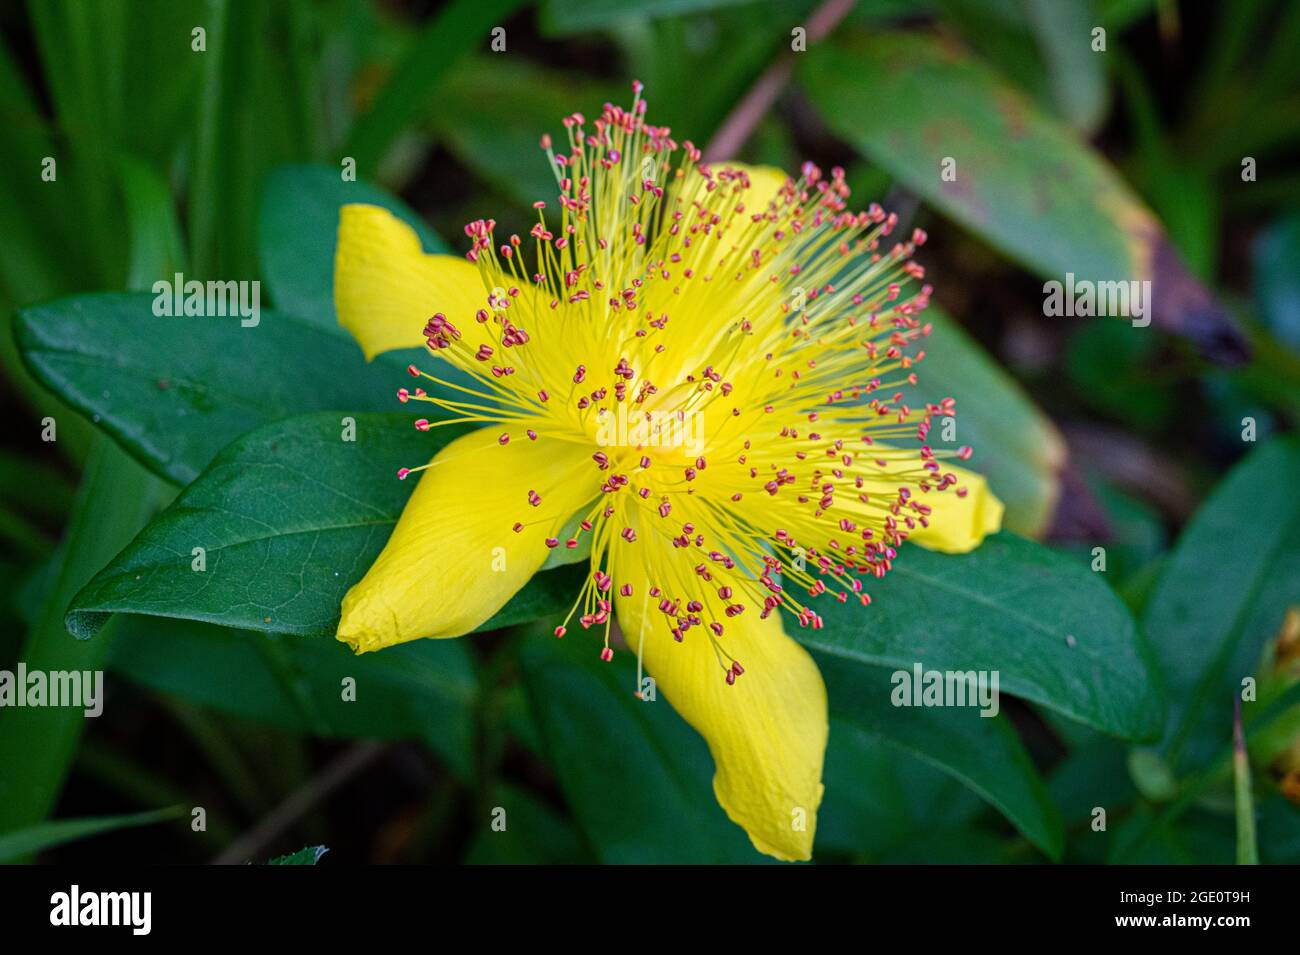 The yellow flower of St John’s Wort Stock Photo